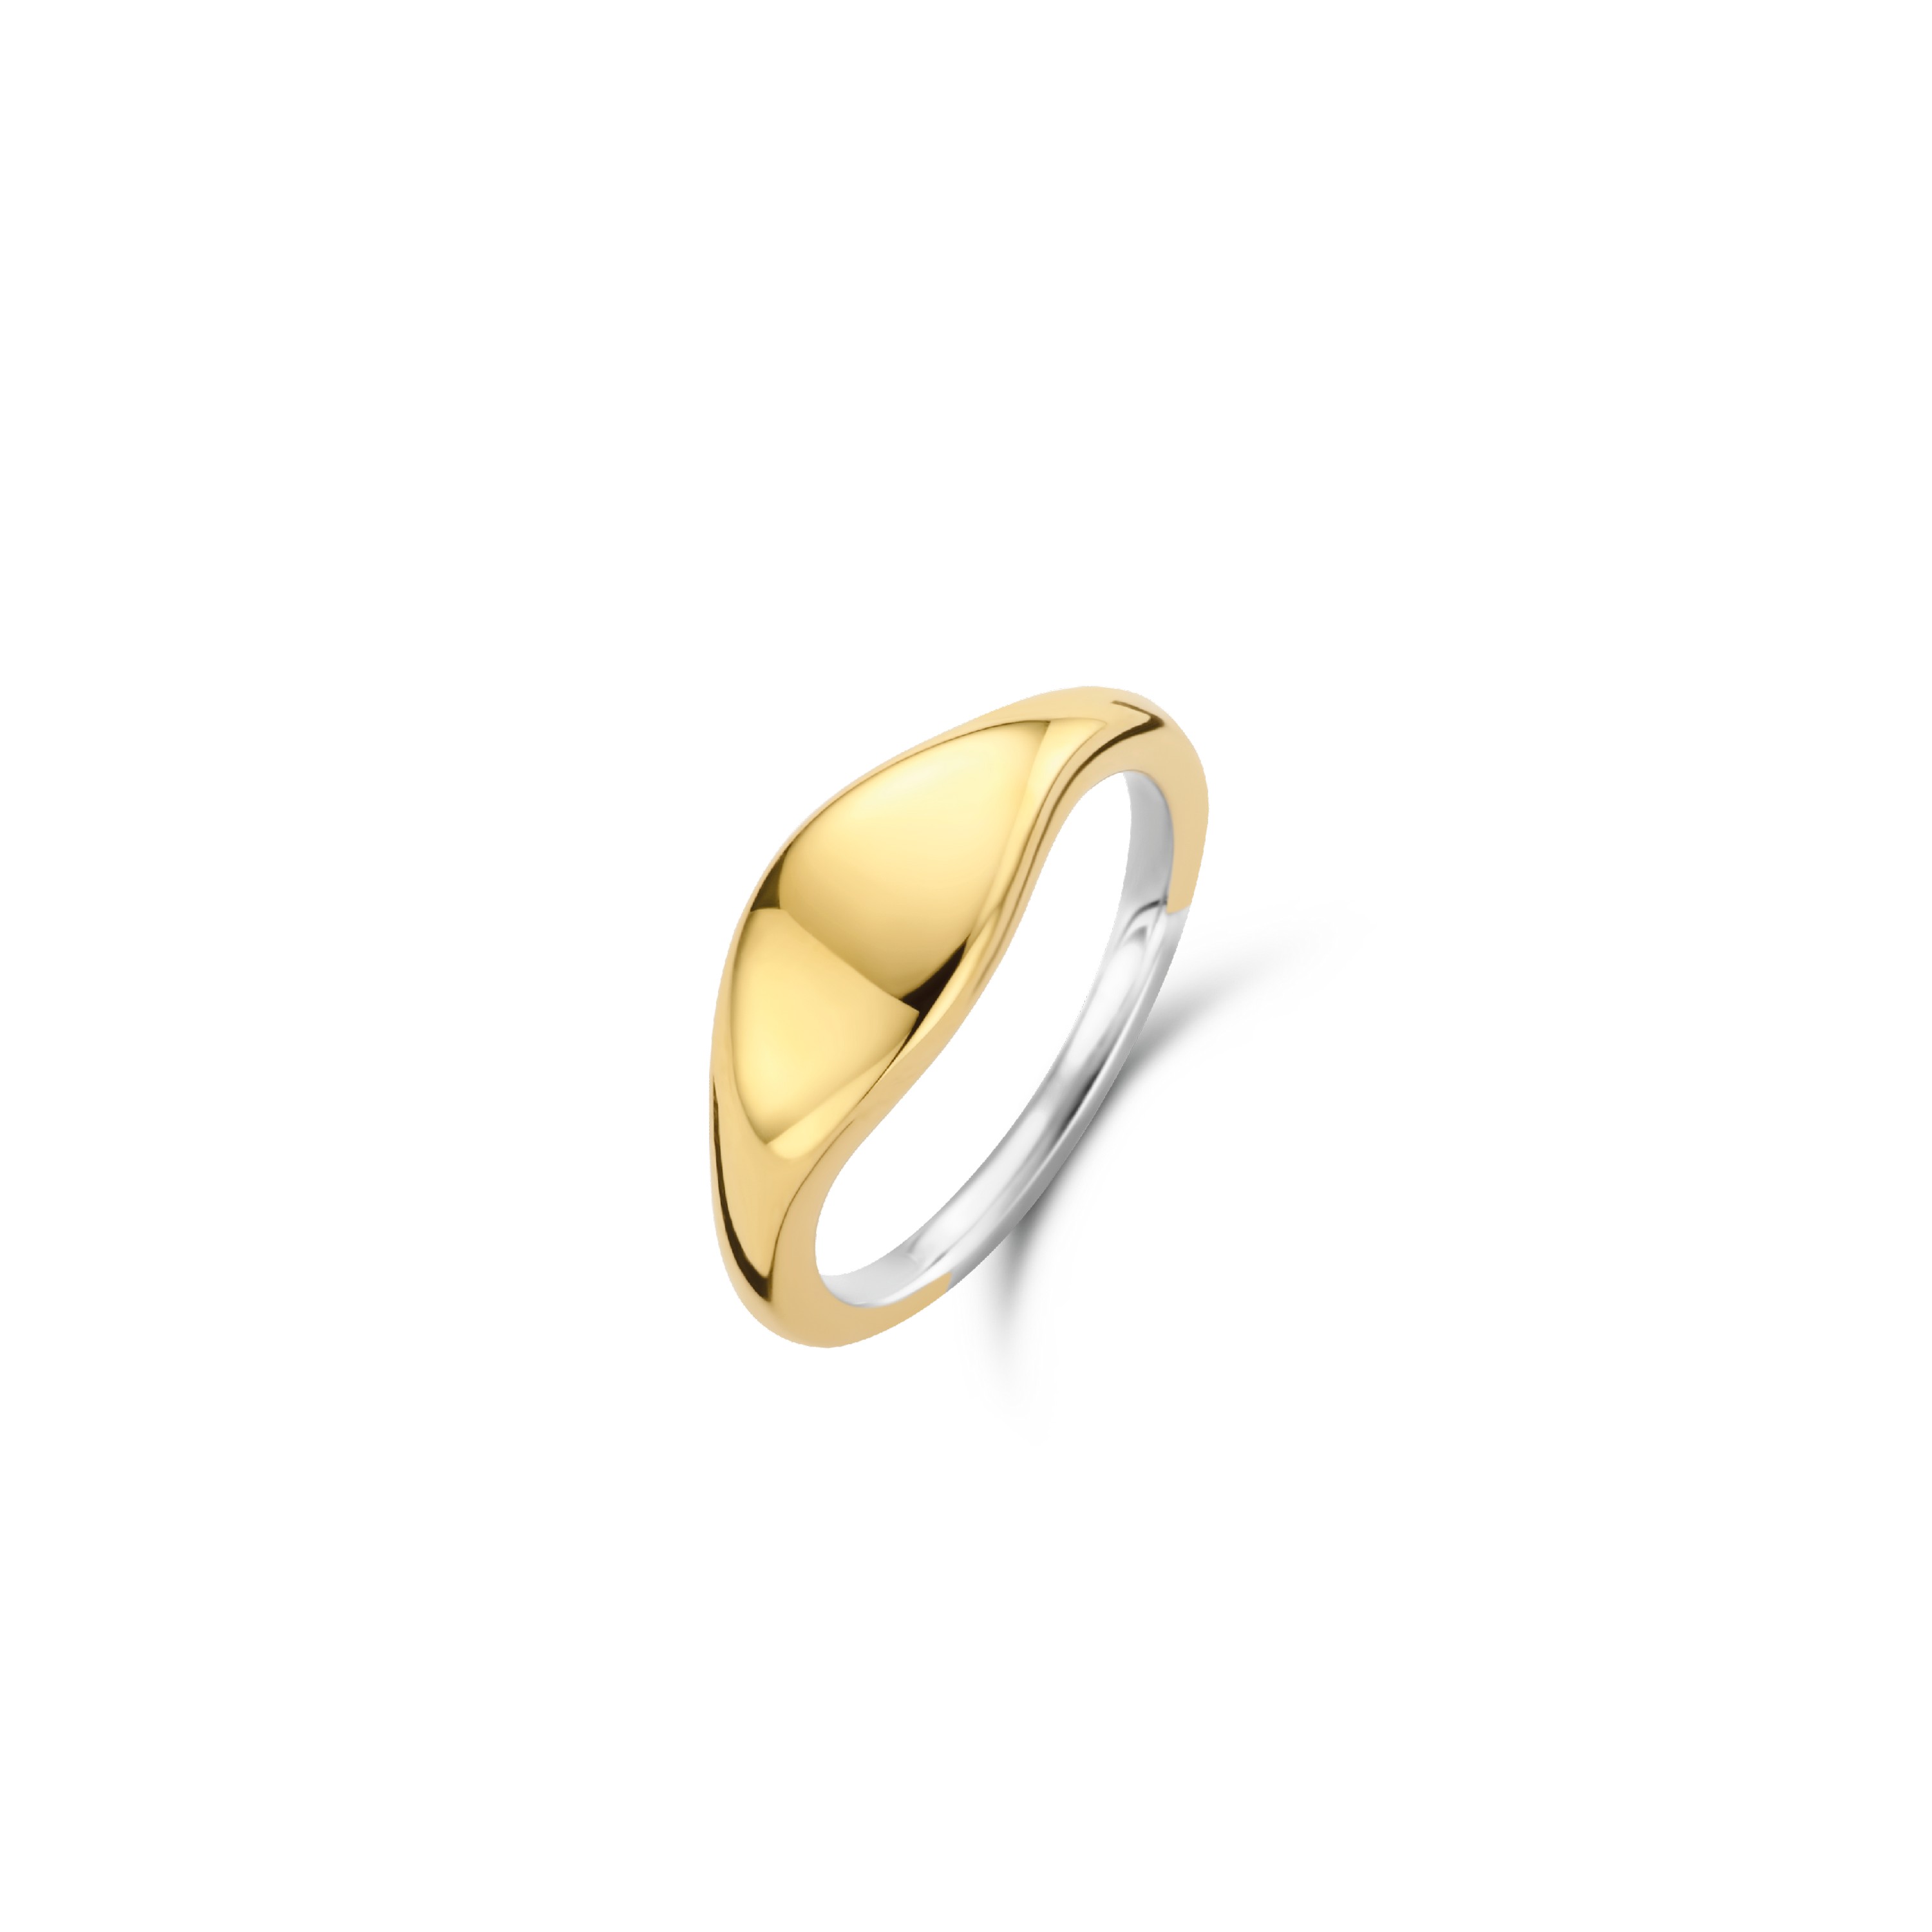 TI SENTO - Milano Ring 12223SY Gala Jewelers Inc. White Oak, PA